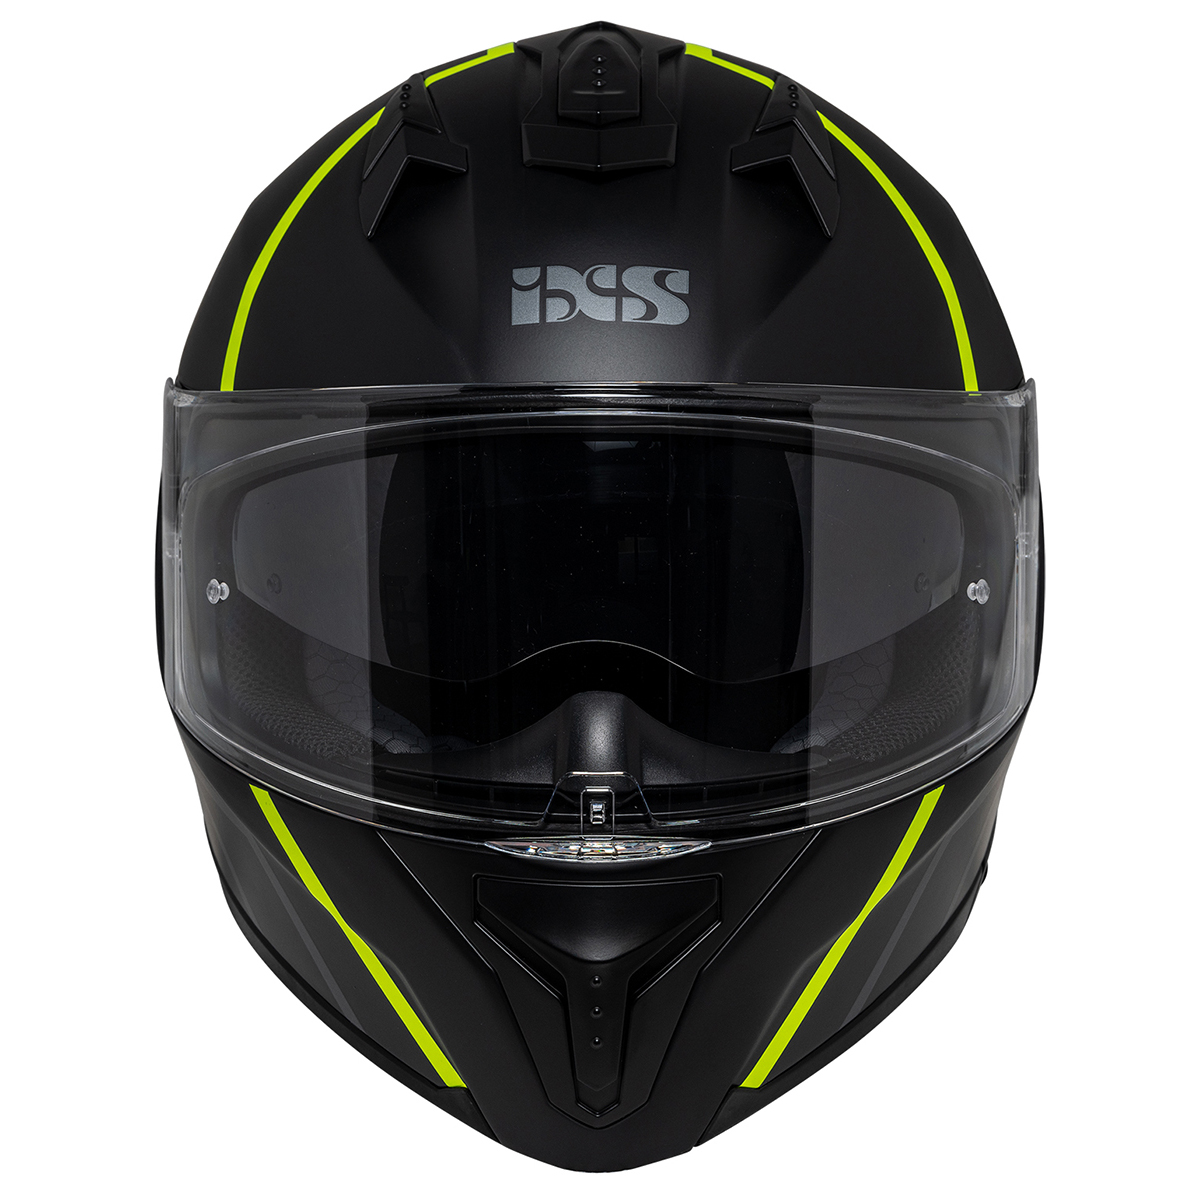 iXS Helm iXS217 2.0, schwarz-fluogelb matt